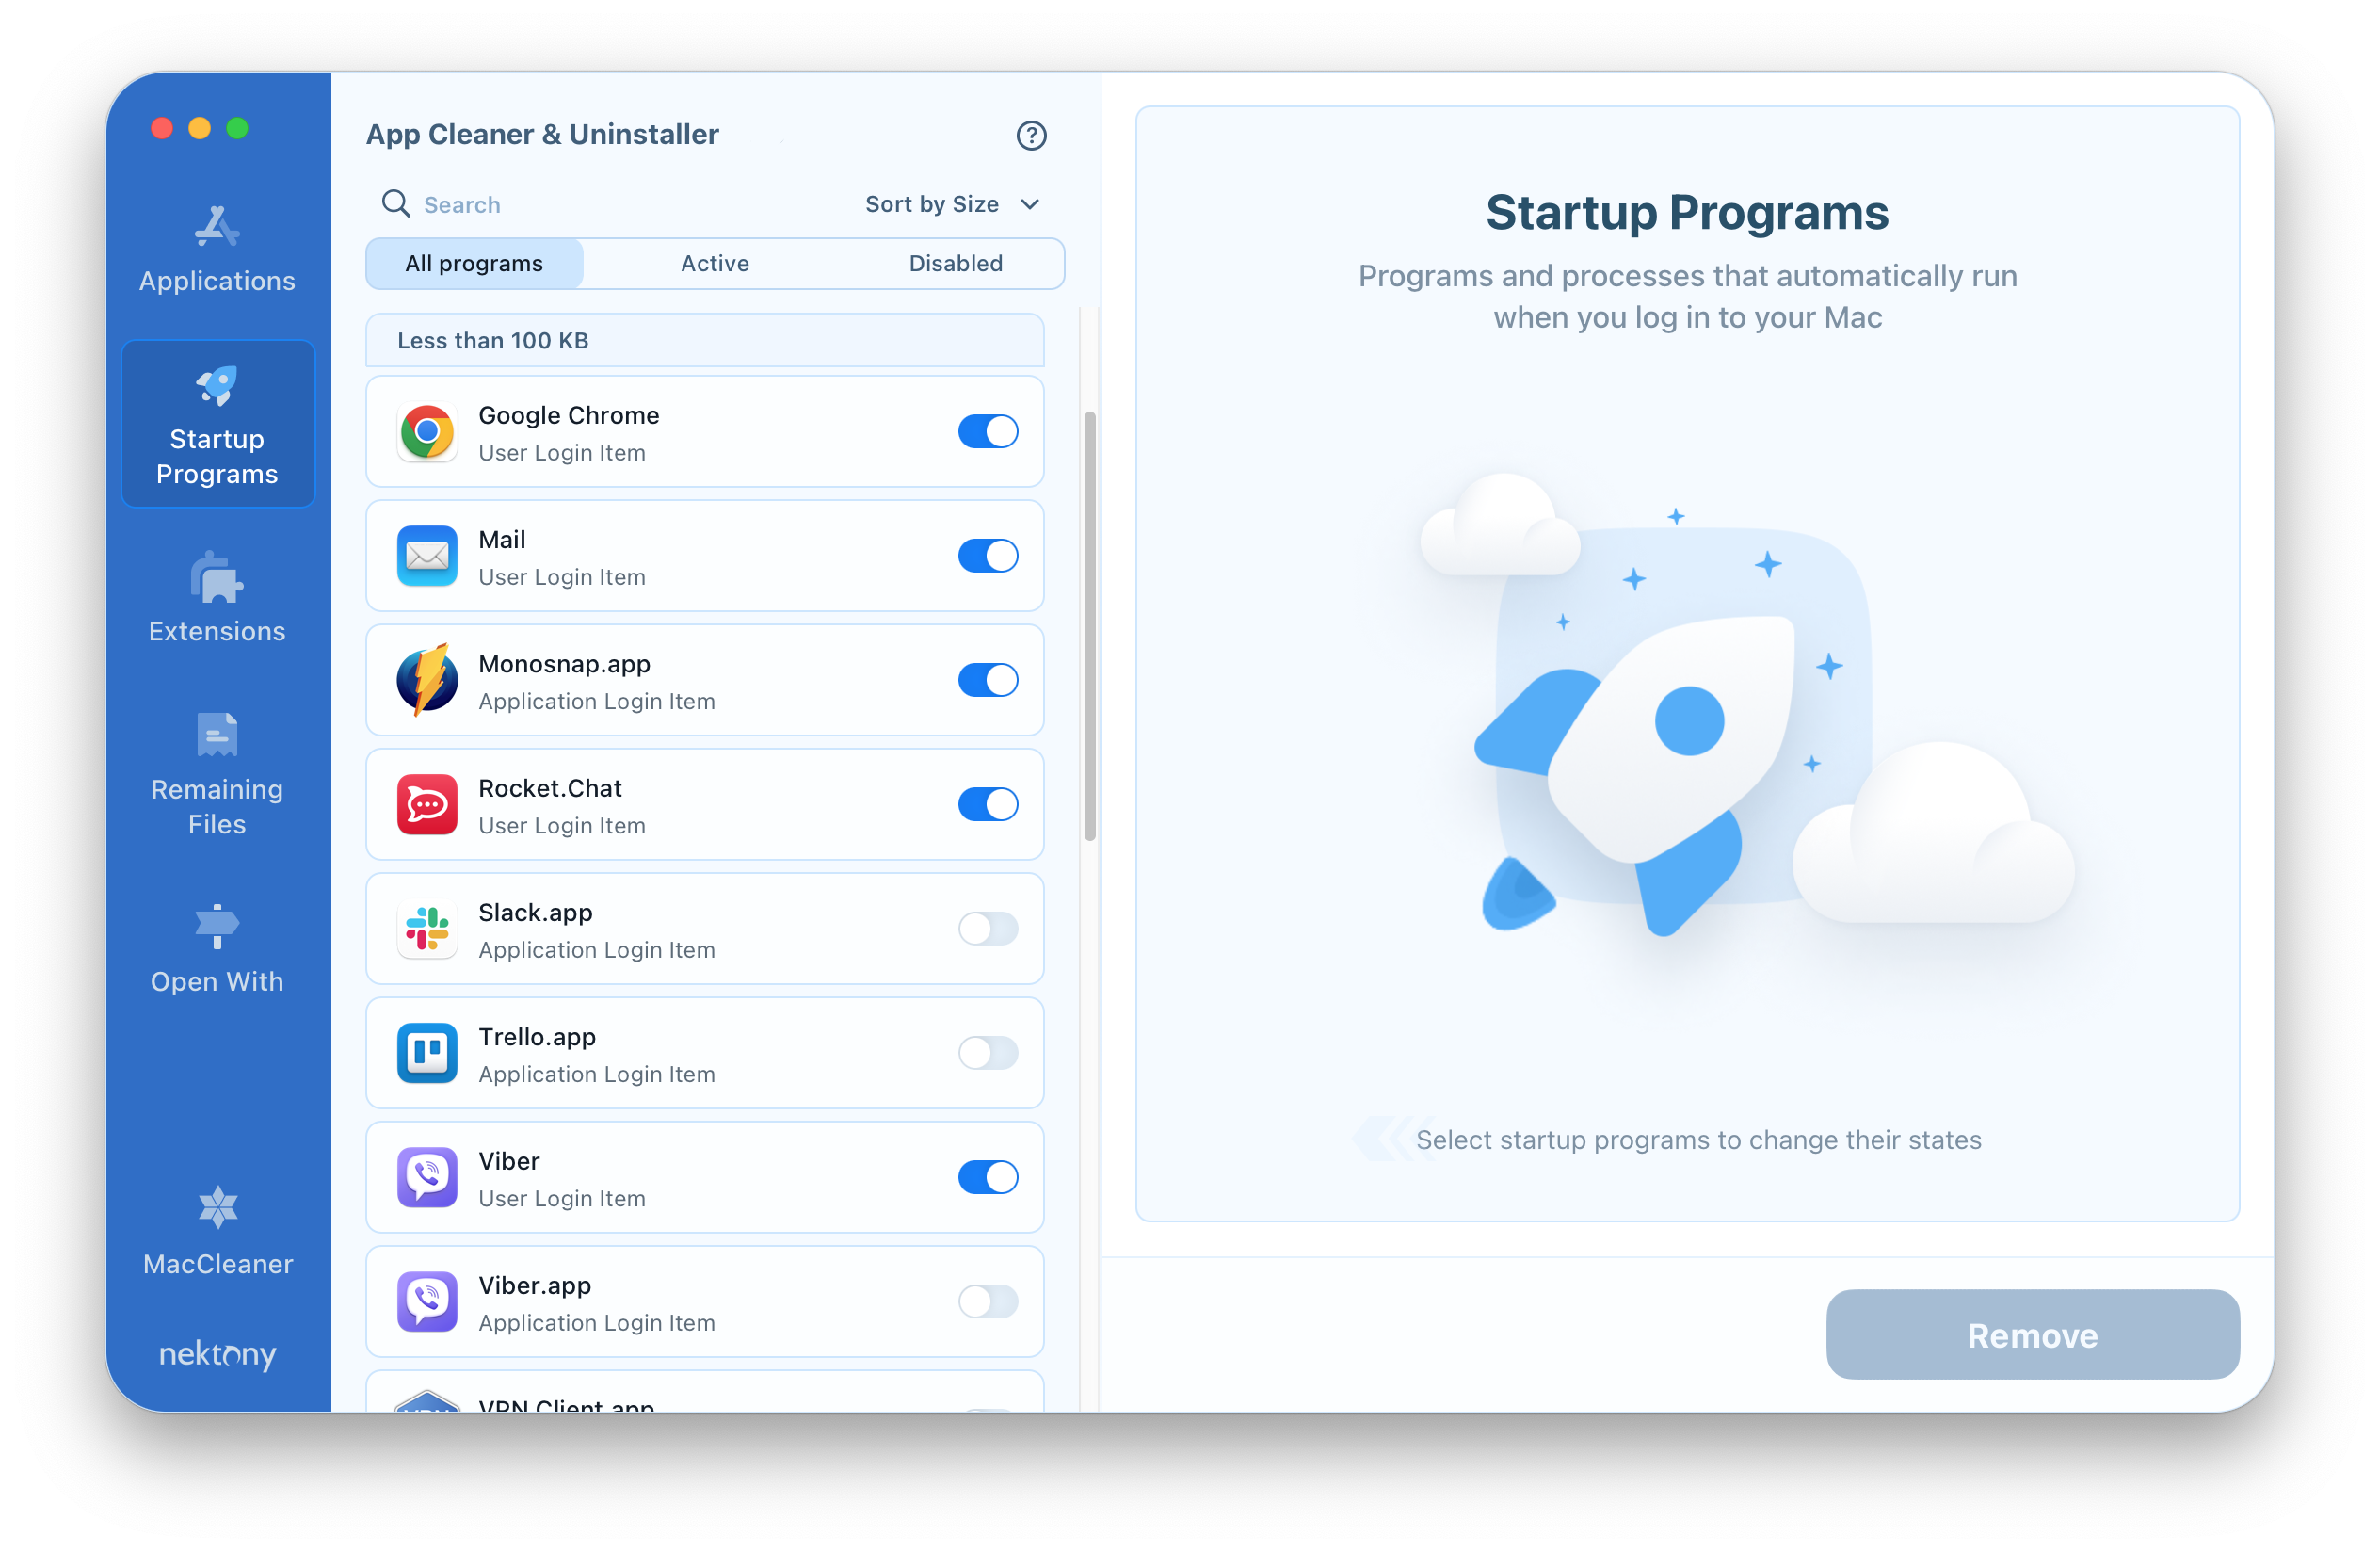 App Cleaner Uninstaller showing startup programs